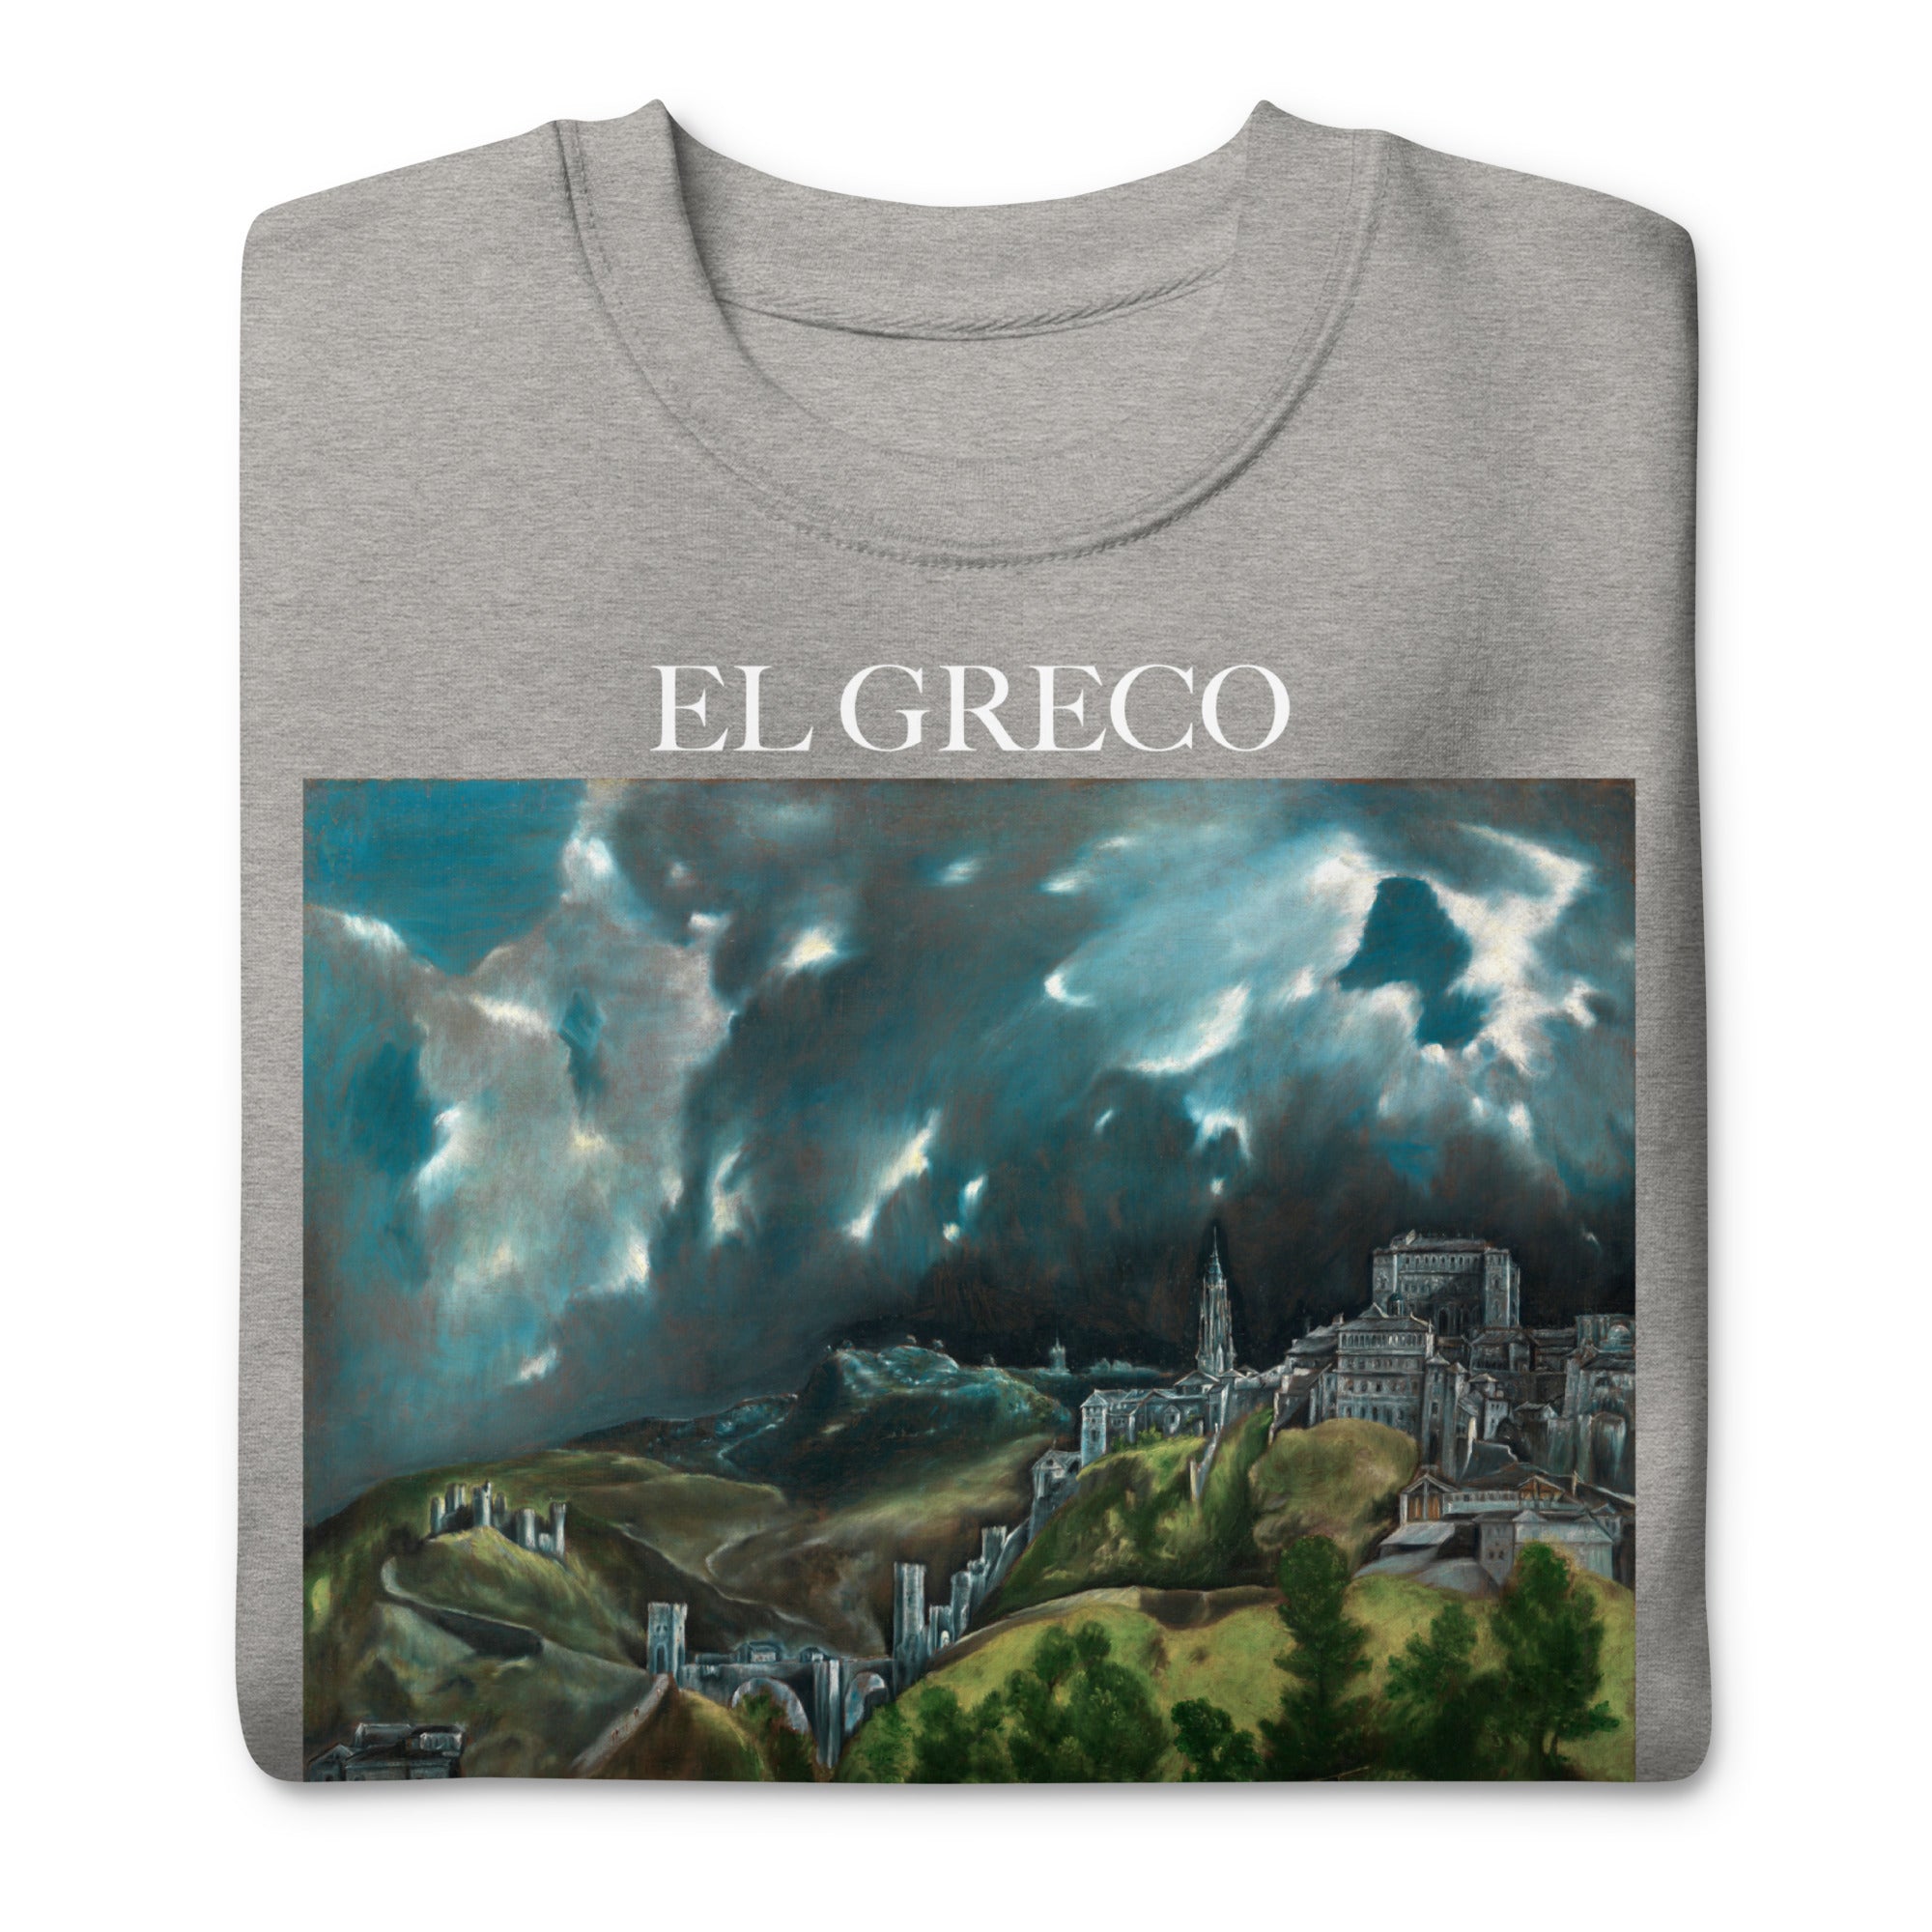 El Greco 'View of Toledo' Famous Painting Sweatshirt | Unisex Premium Sweatshirt